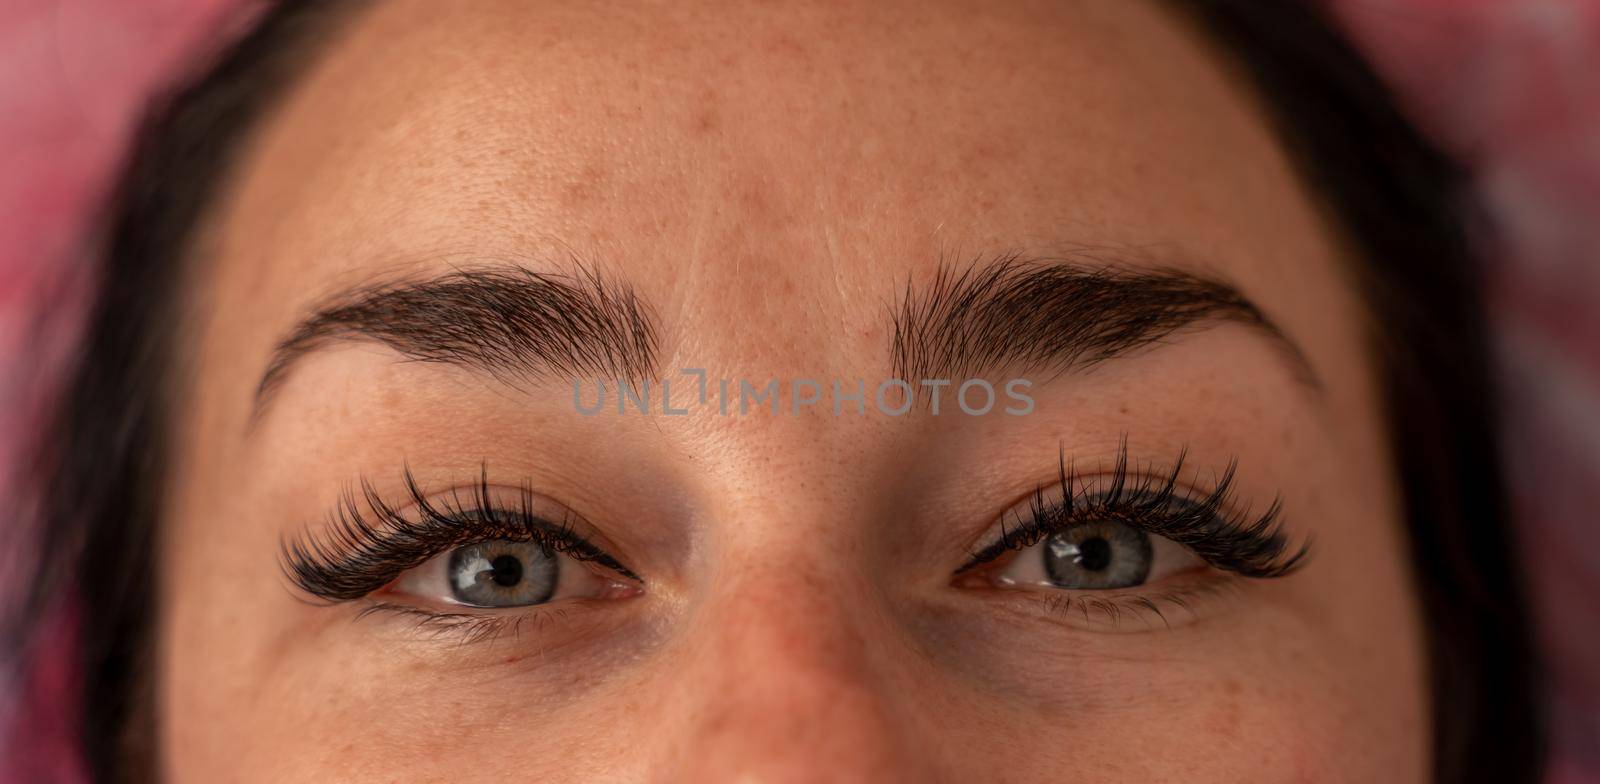 Eyelash extension procedure. Woman eye with long eyelashes. lashes, close up, macro, selective focus